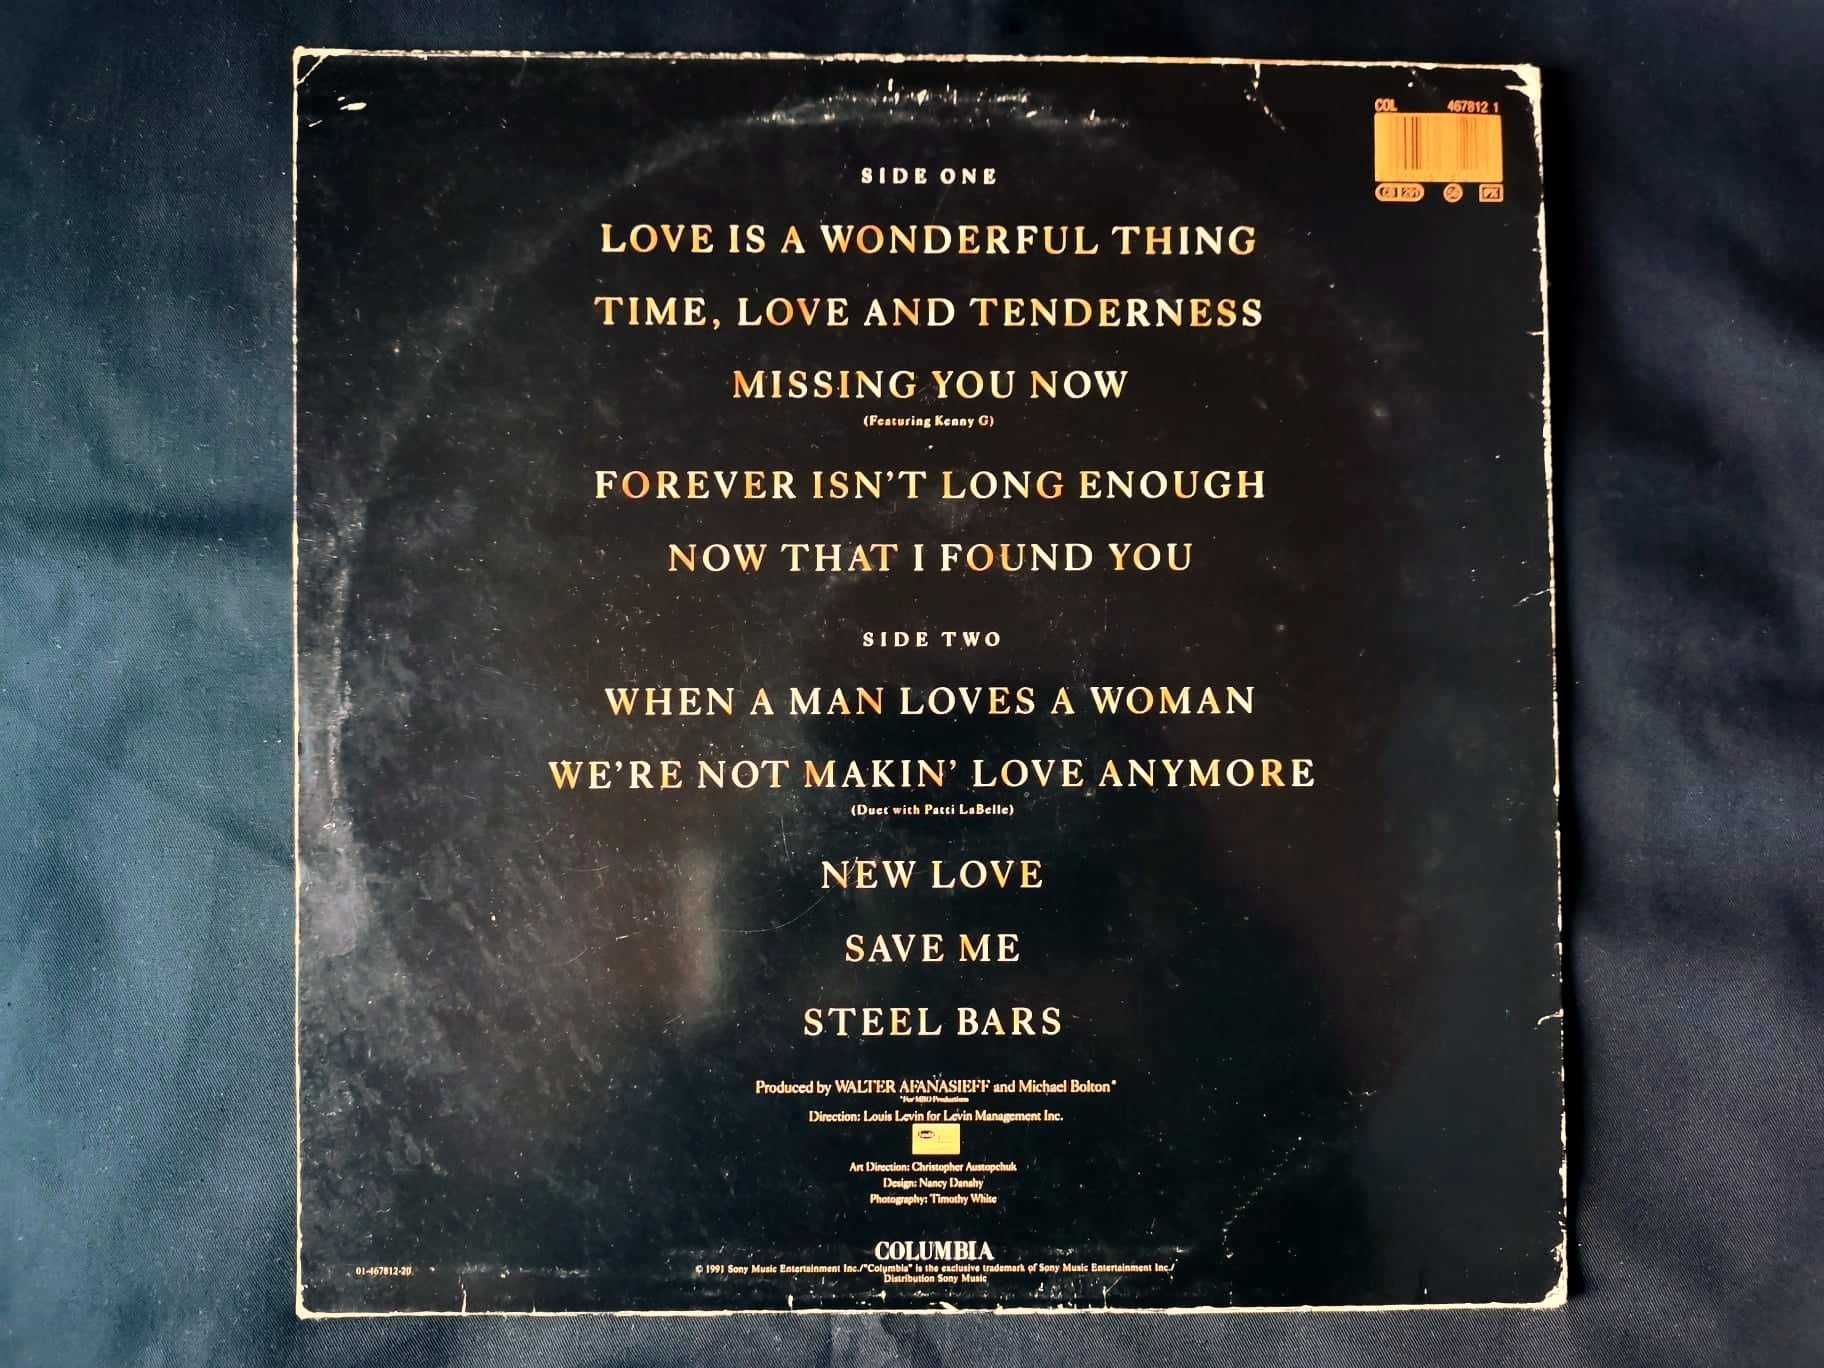 LP Michael Bolton – Time, Love & Tenderness (1991)